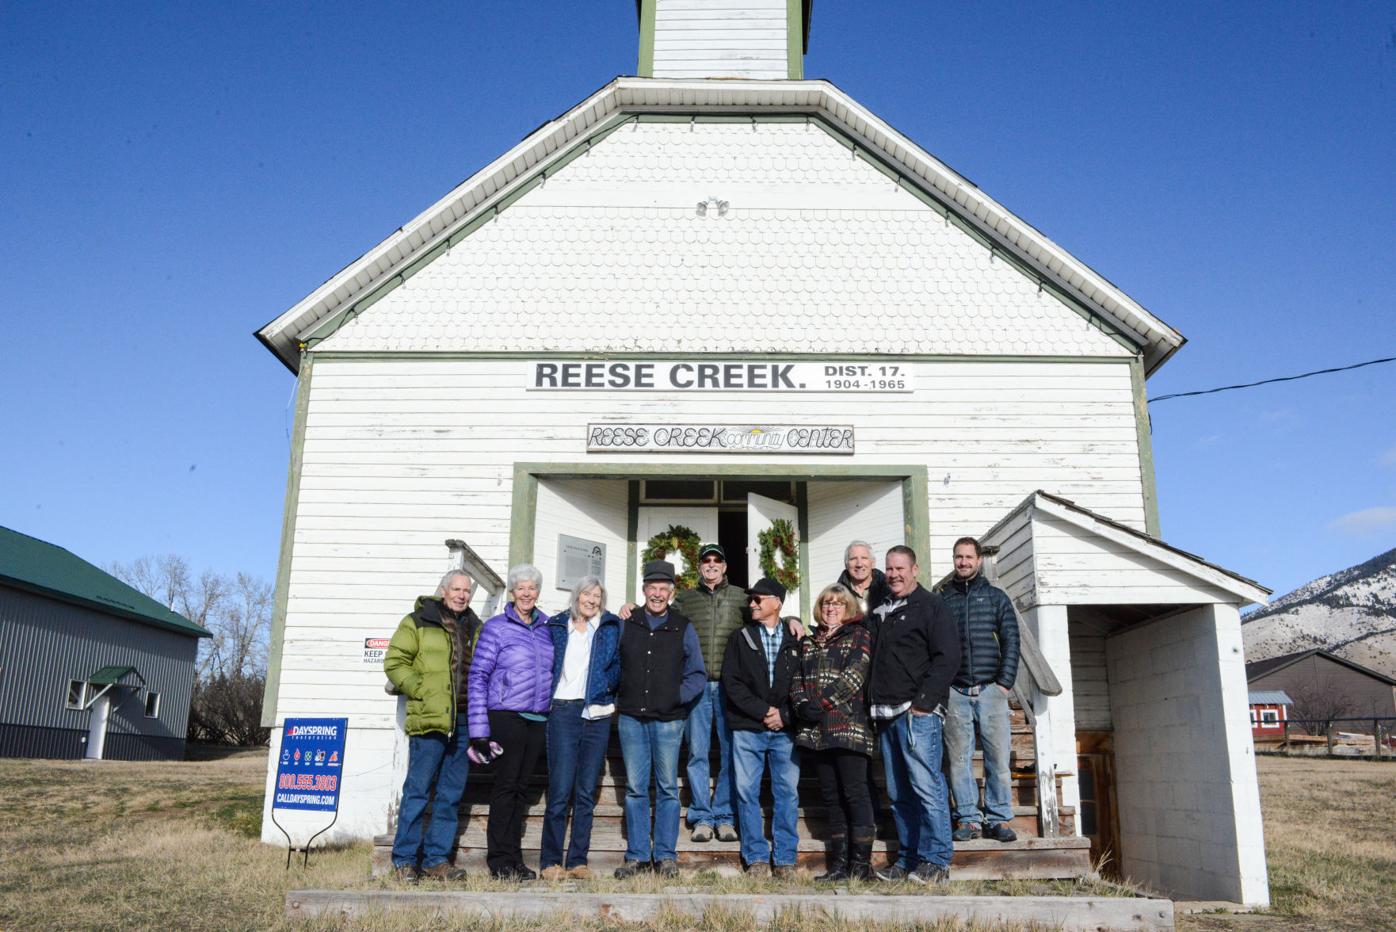 Reese Creek Community Center